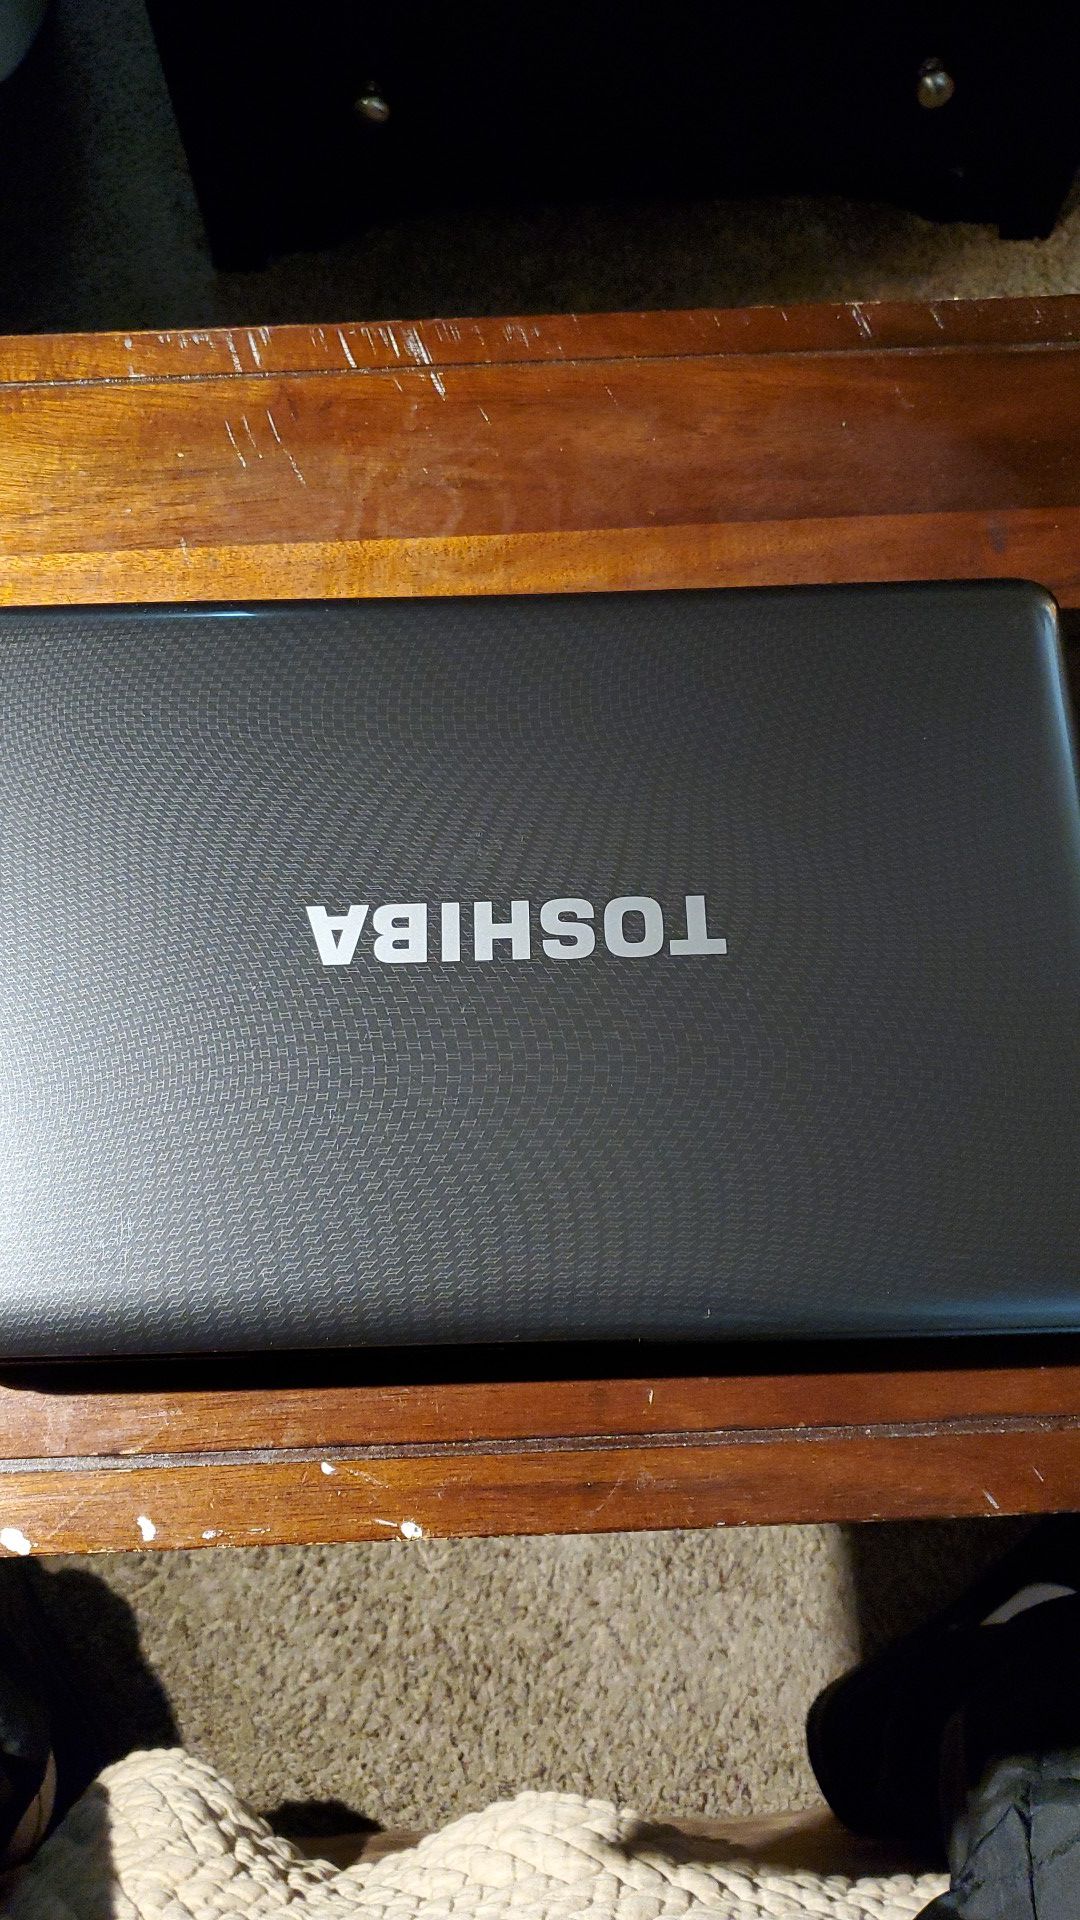 Toshiba core i5. $100